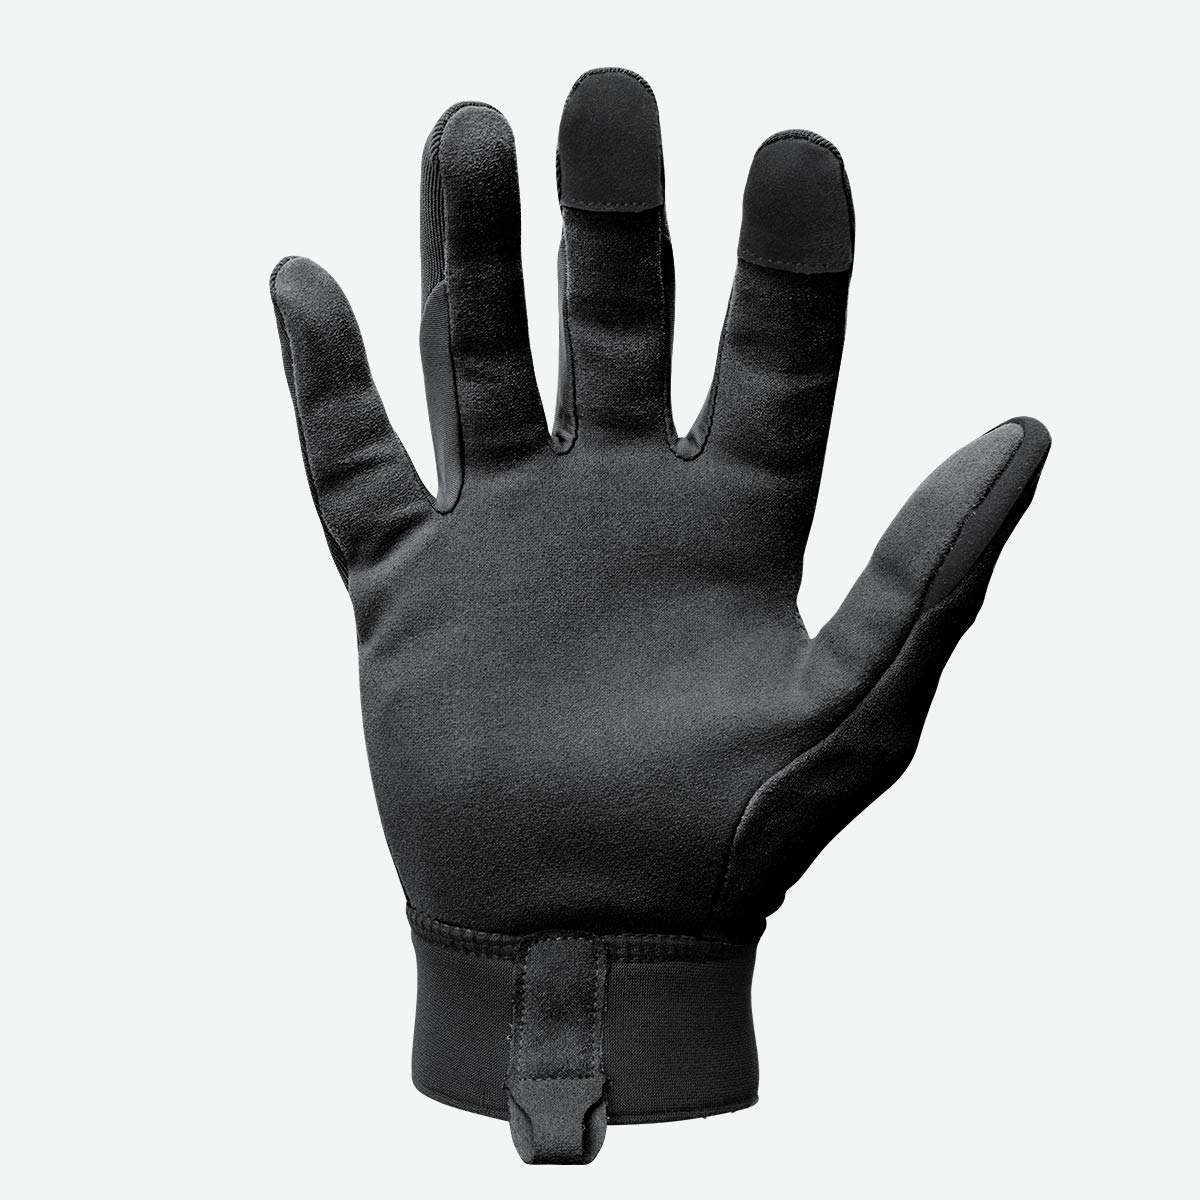 Magpul Technical Glove 2.0 Lightweight Work Gloves, Black, XX-Large